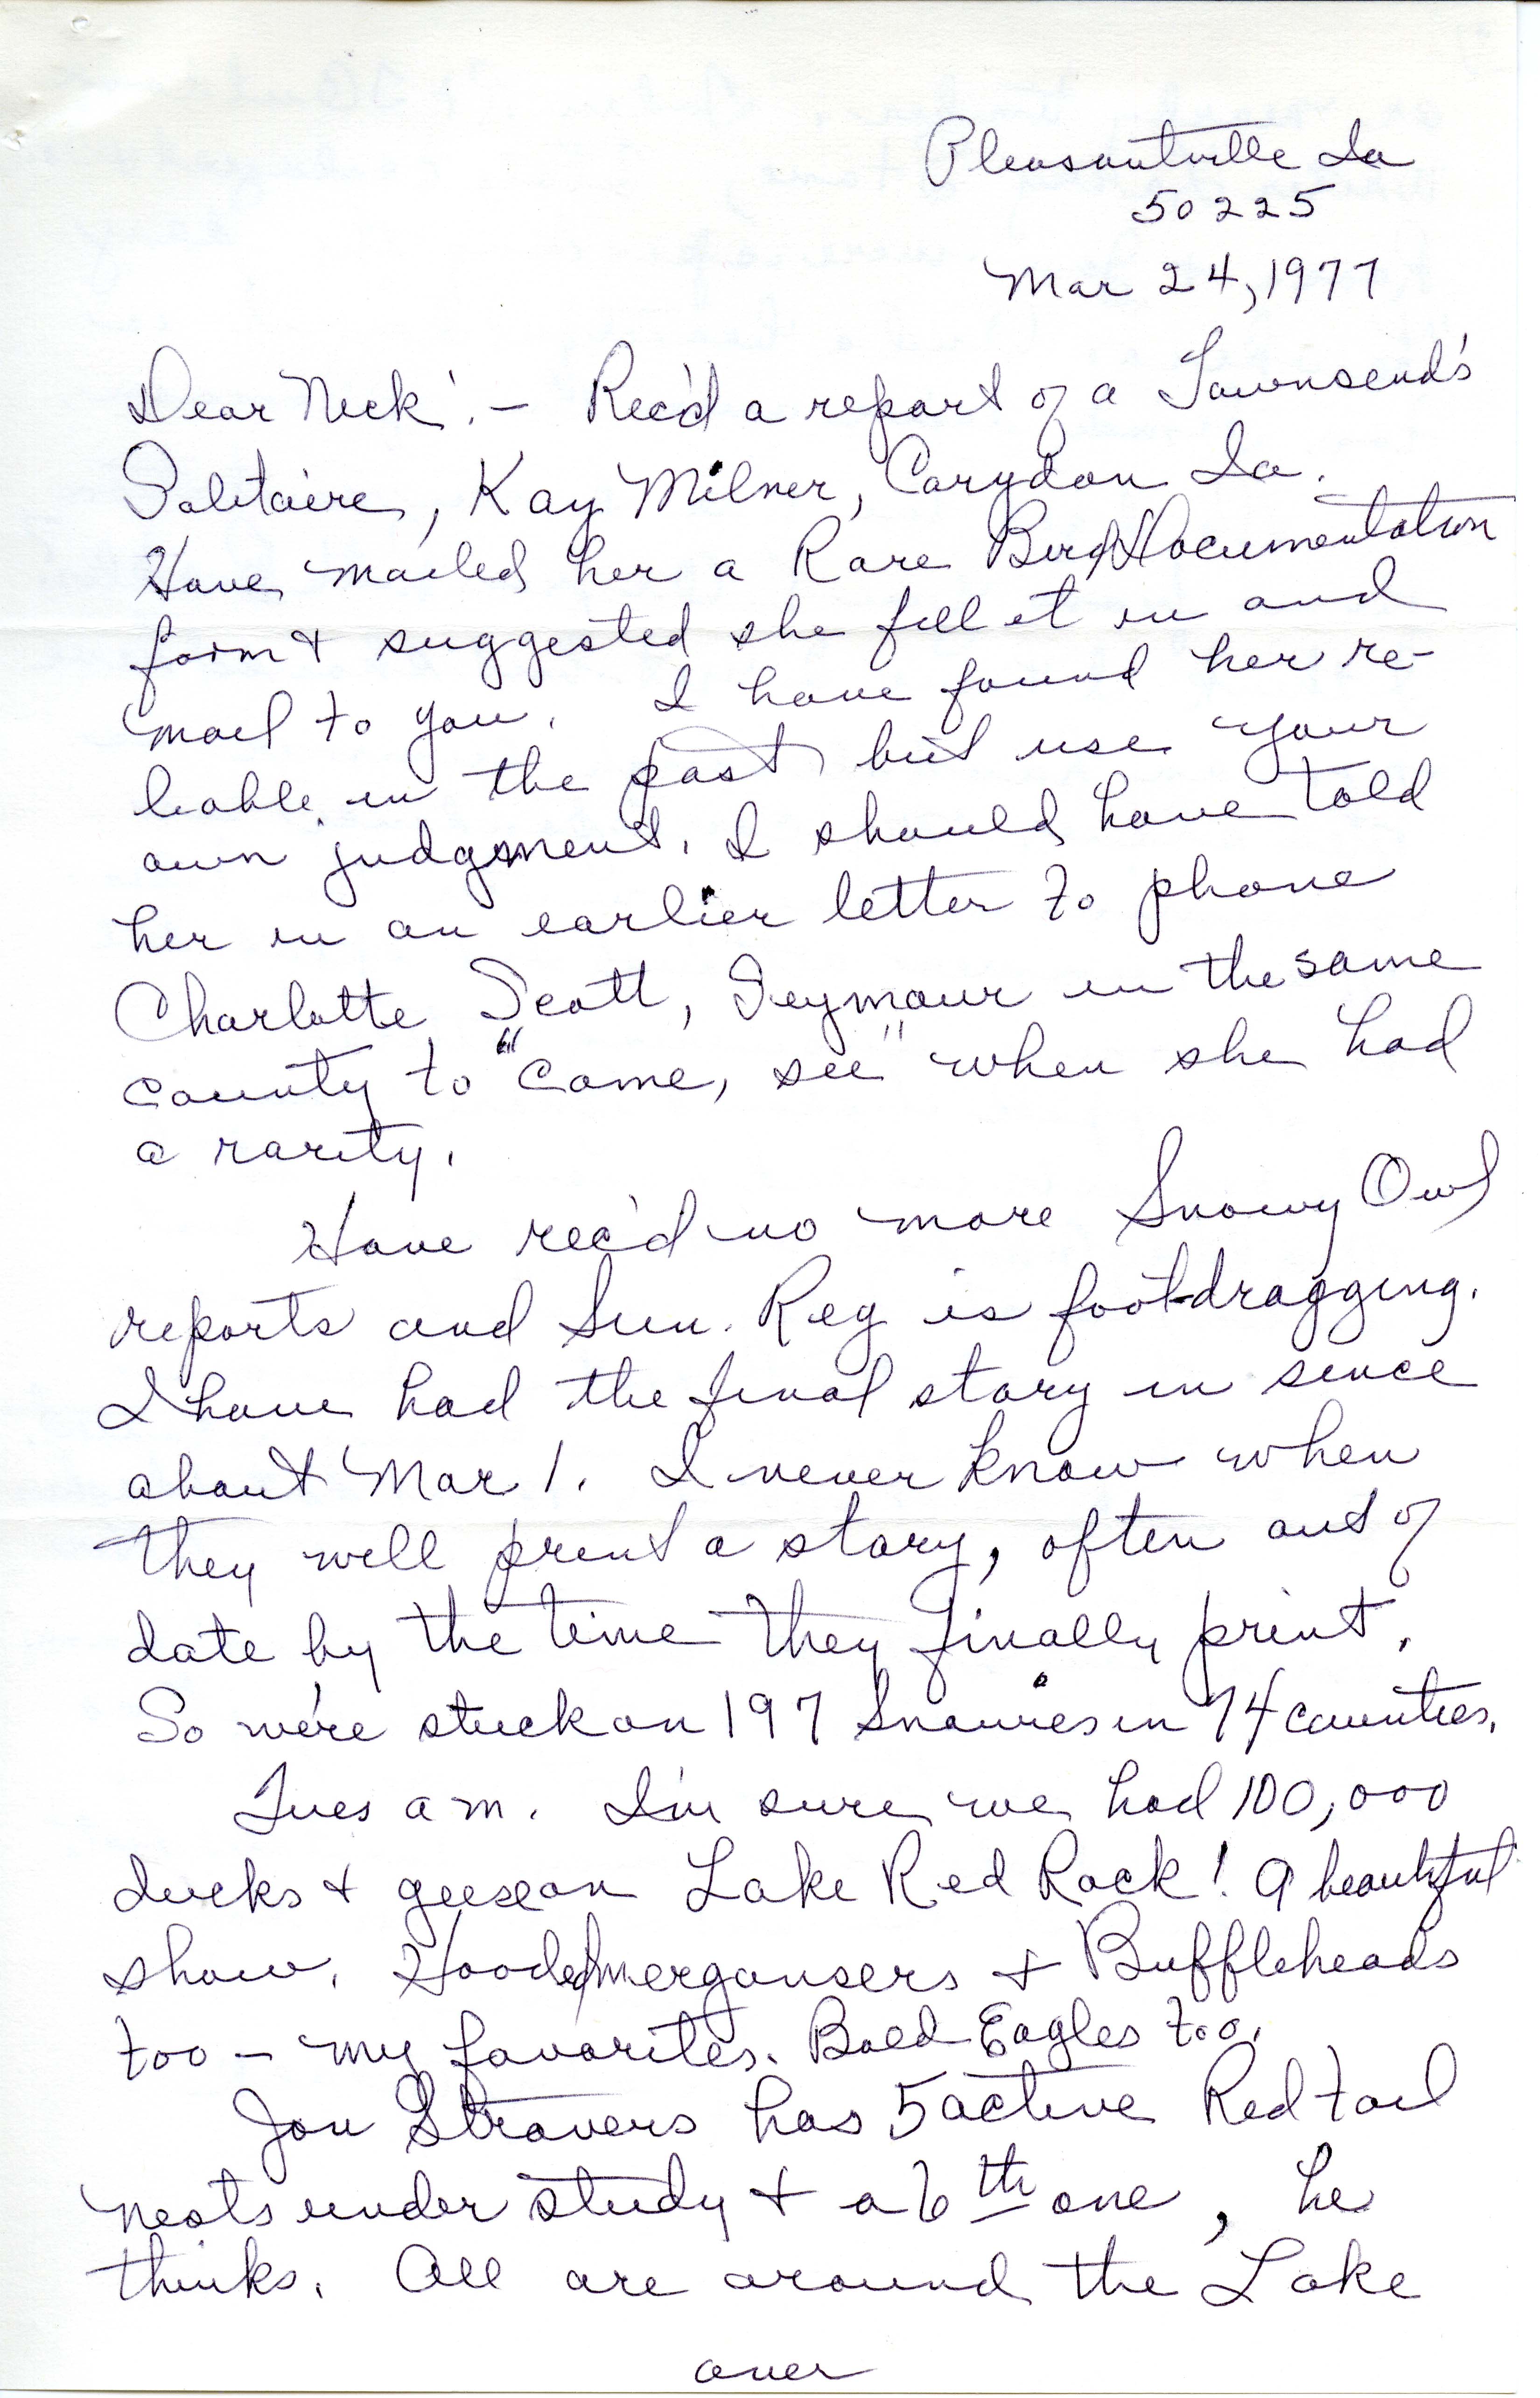 Gladys Black letter to Nicholas S. Halmi regarding bird sighting reports, March 24, 1977